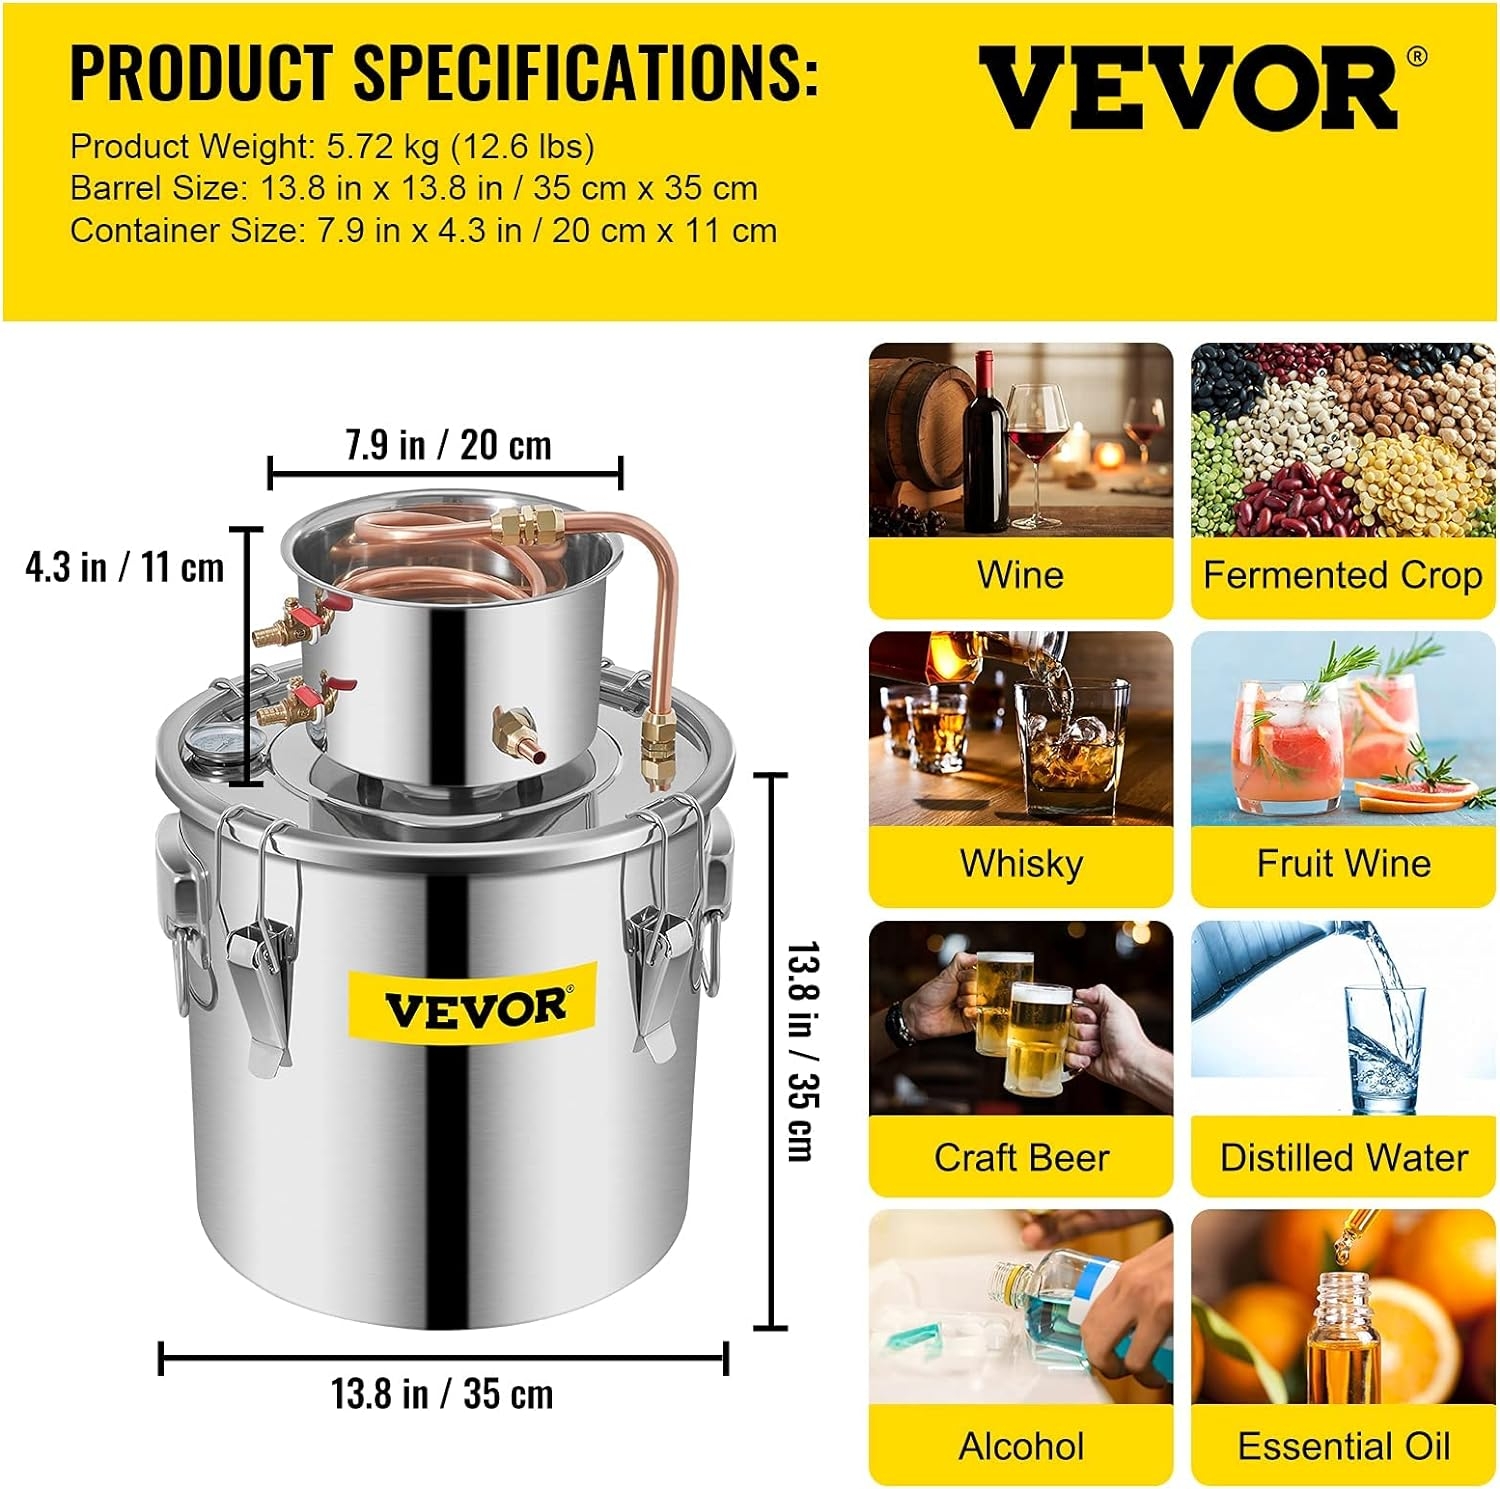 Vevor Alcohol Still Review (Which Model Is Best) - DIY Distilling